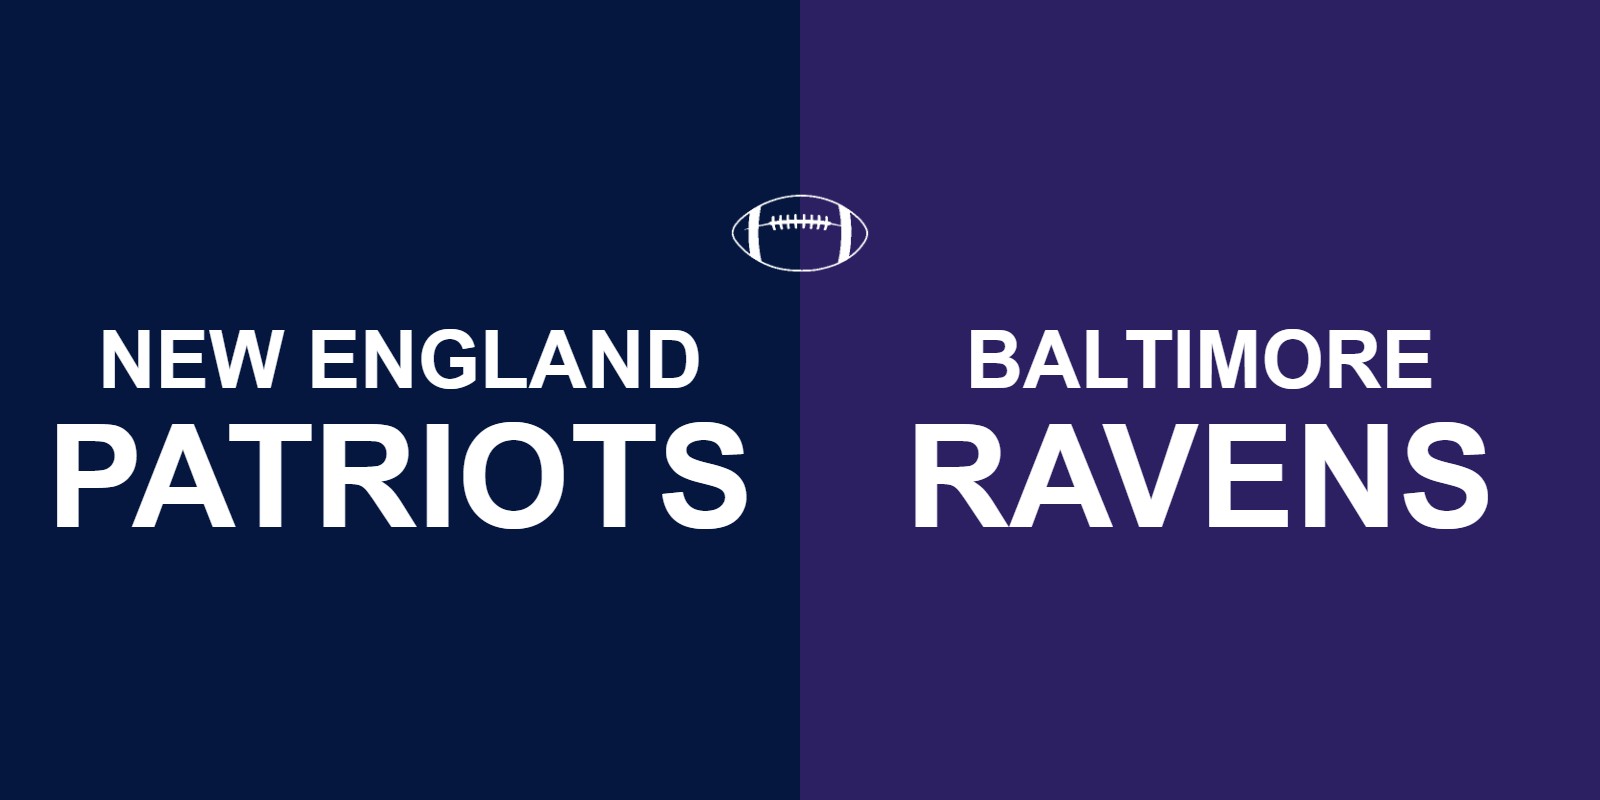 Patriots vs Ravens